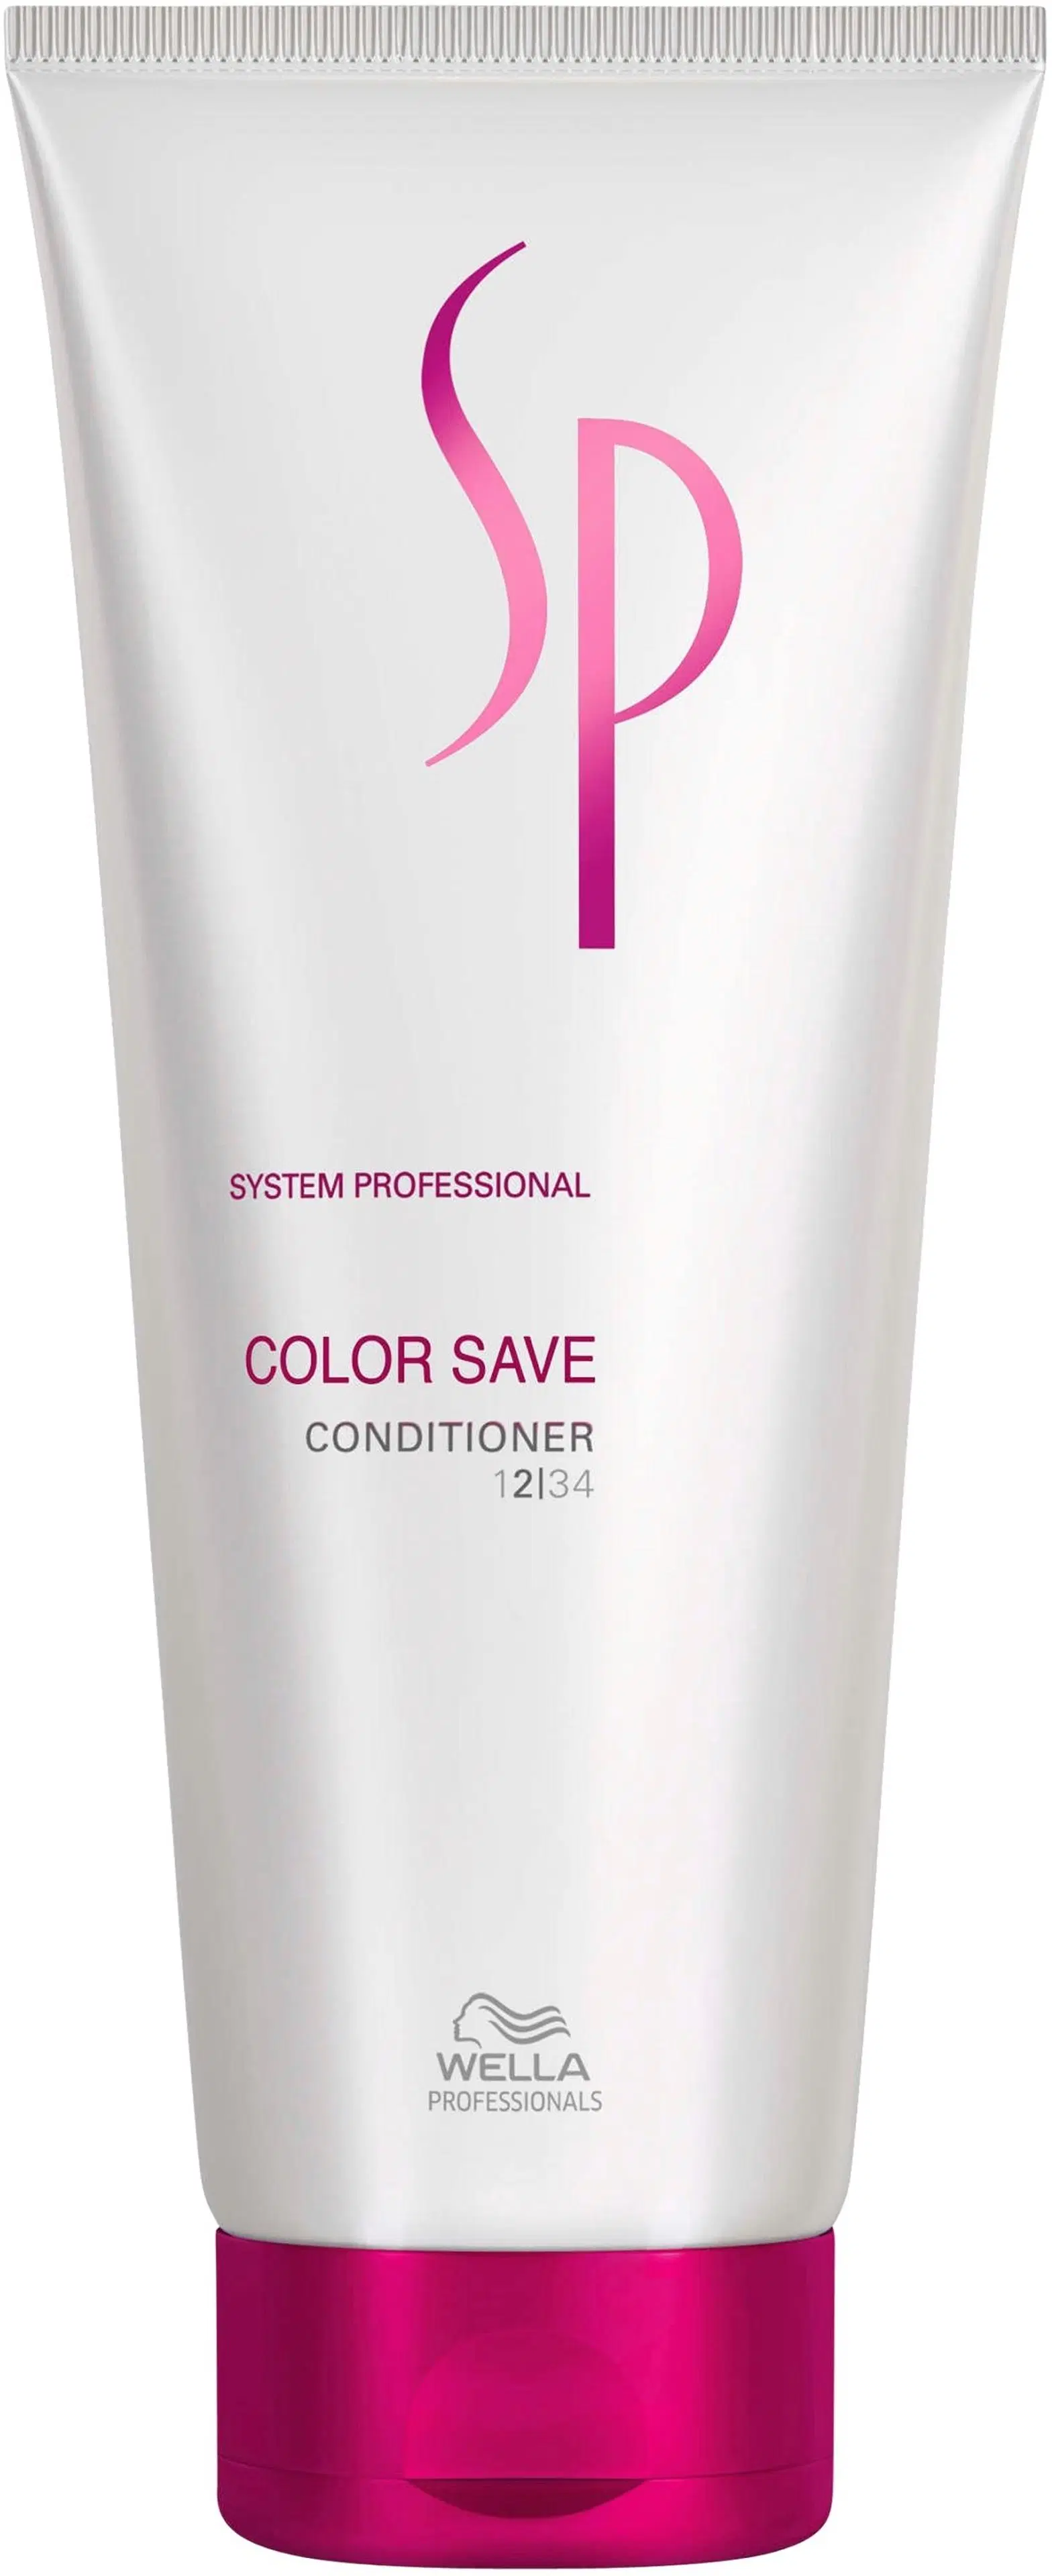 Wella Professionals SP Color Save Conditioner hoitoaine 200 ml